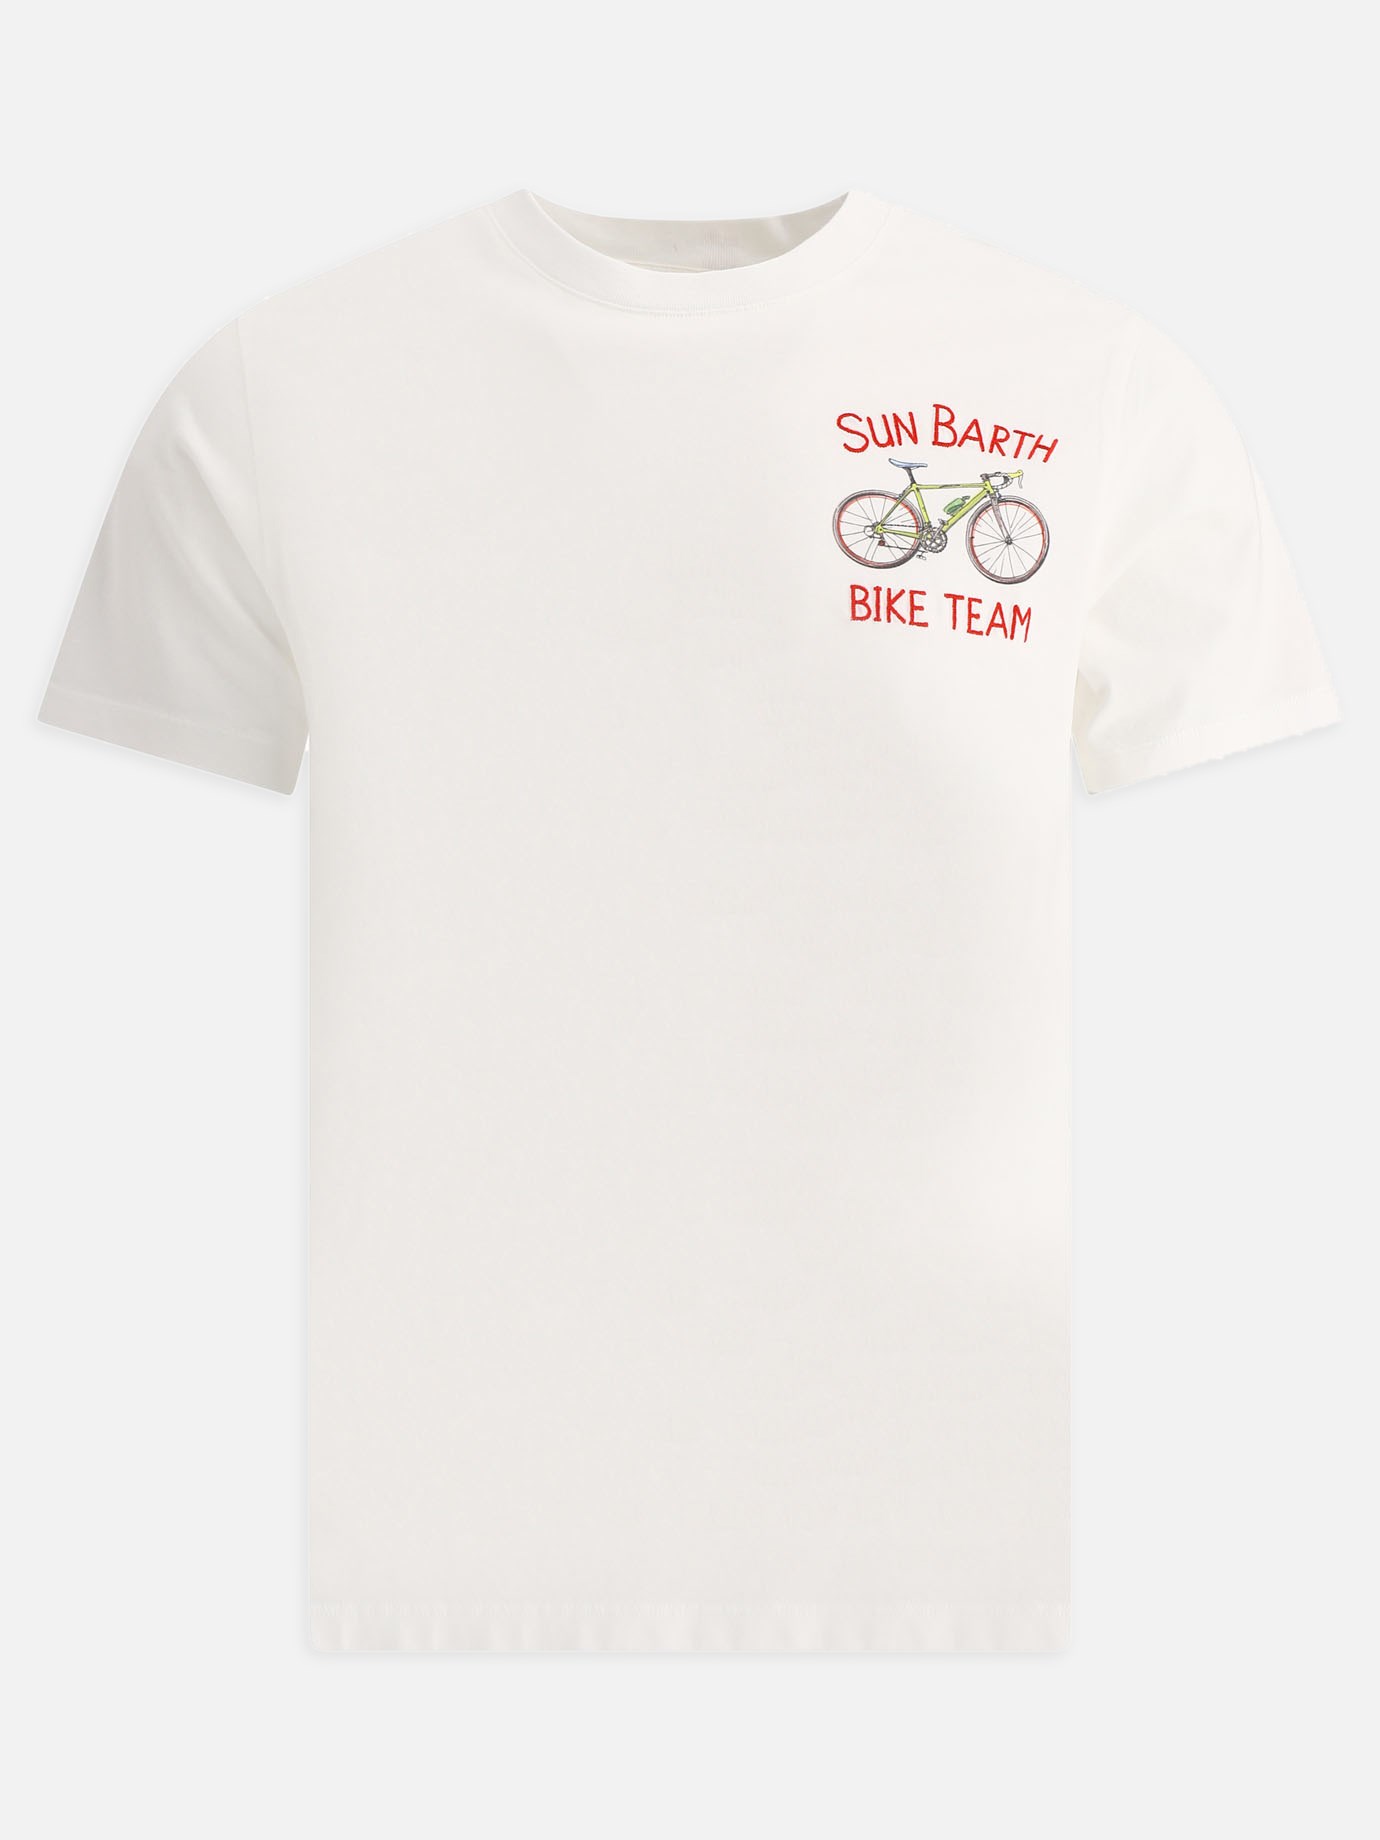  Bike Team  t-shirtby MC2 Saint Barth - 3